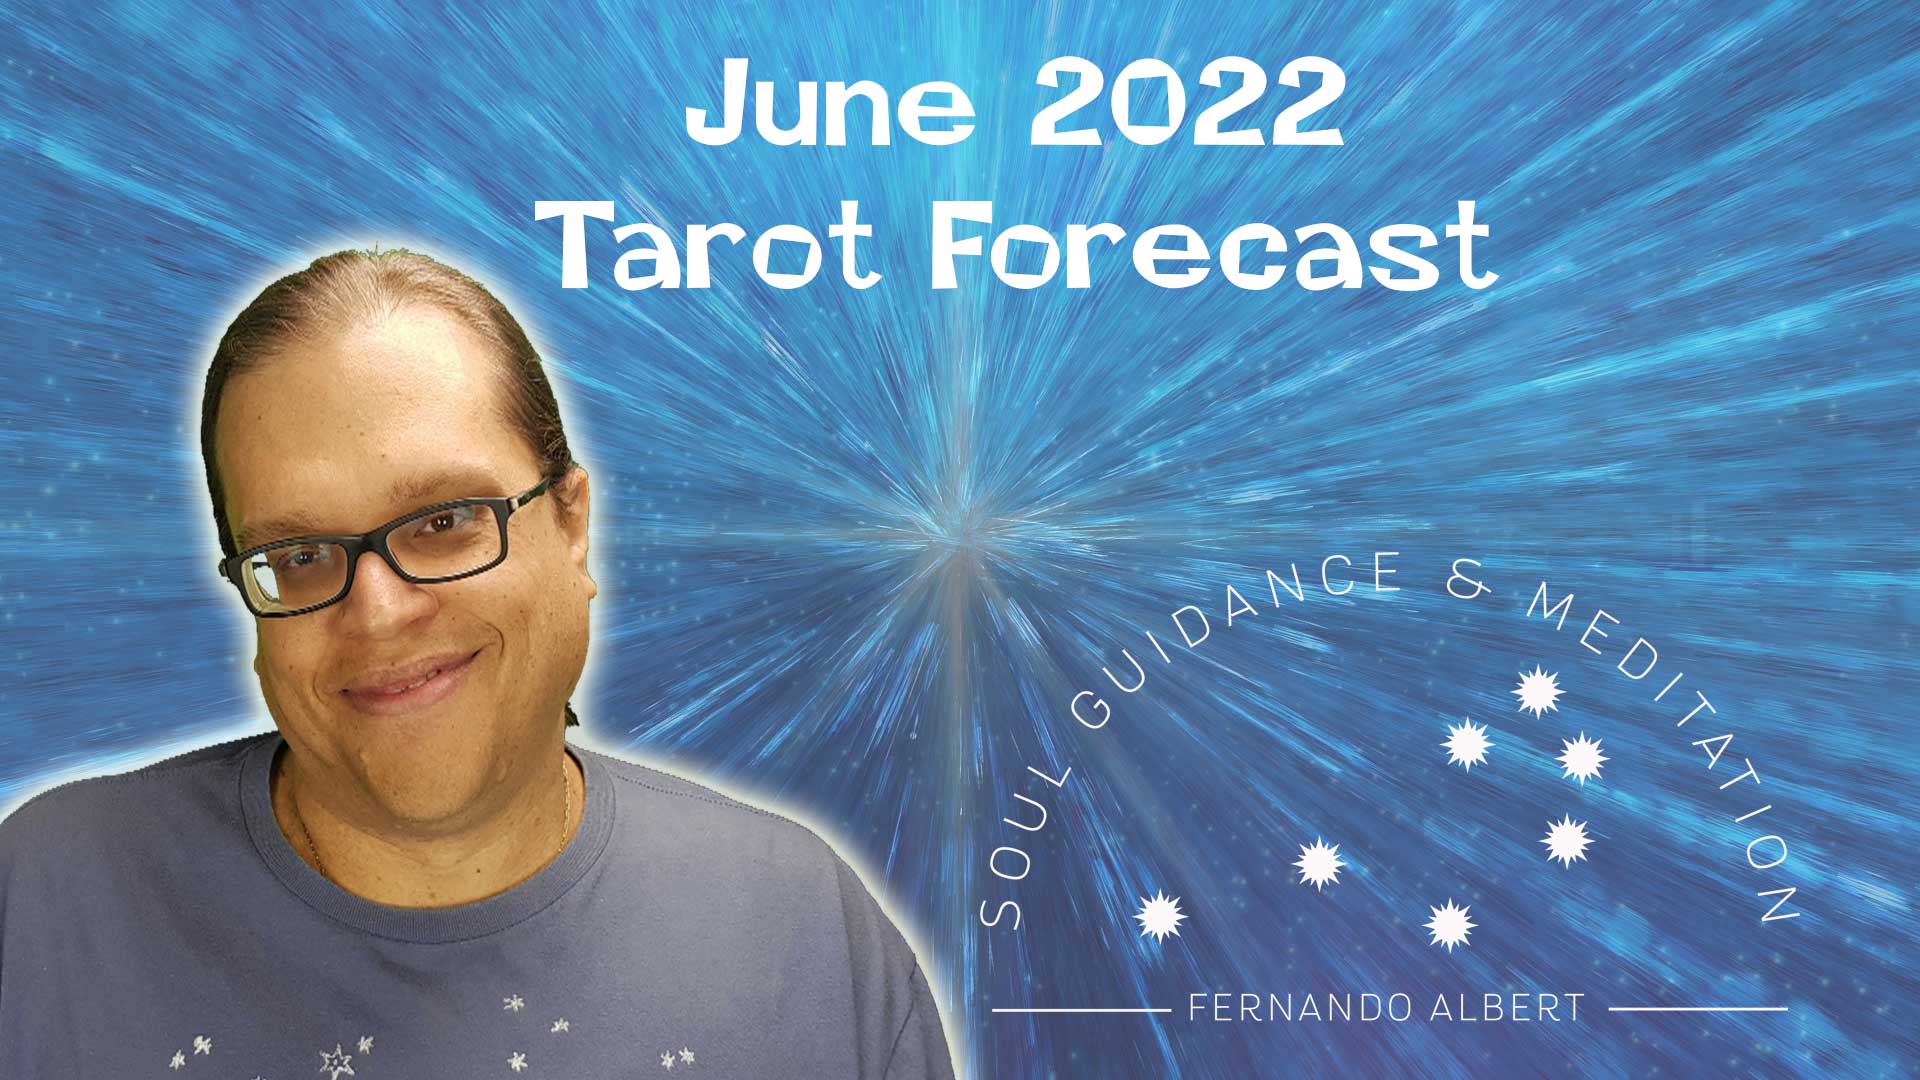 Fernando Albert shows to announce June 2022 Forecast